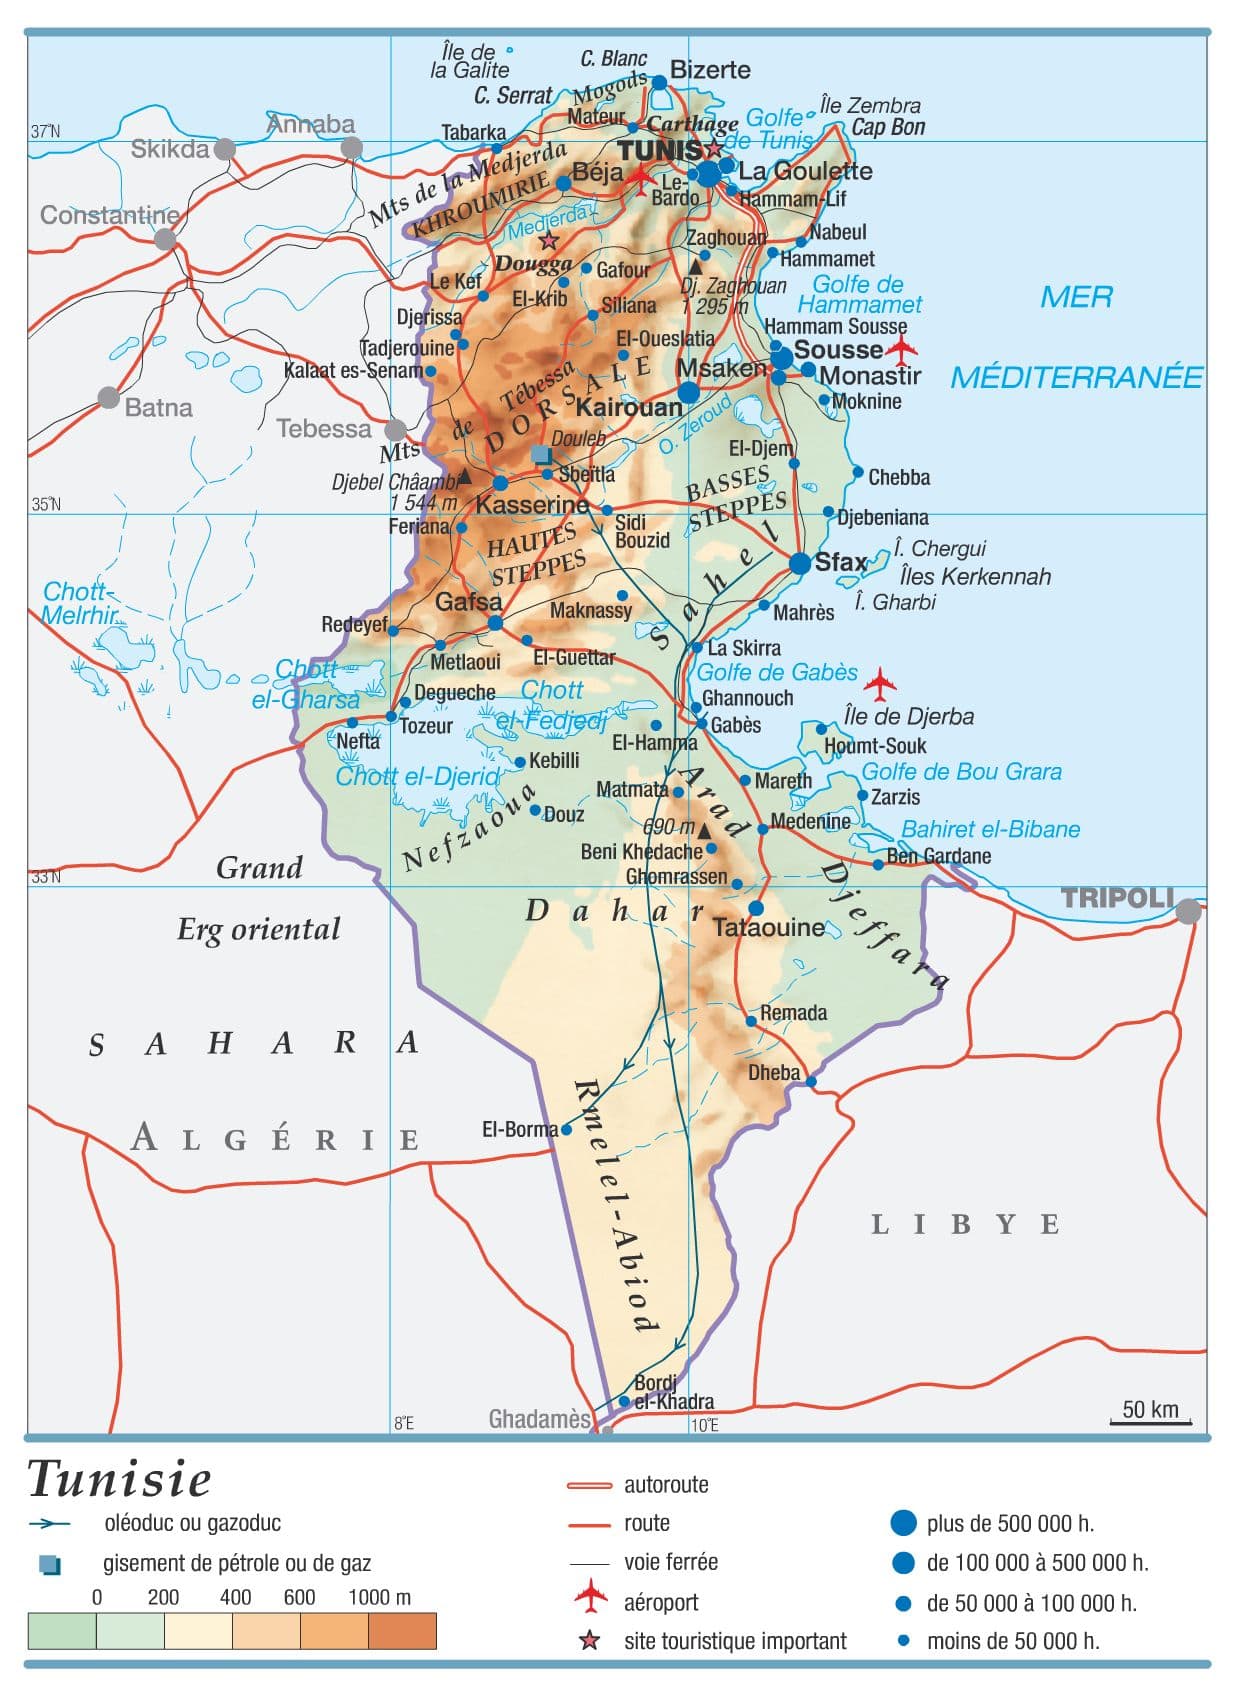 geographie-de-la-tunisie